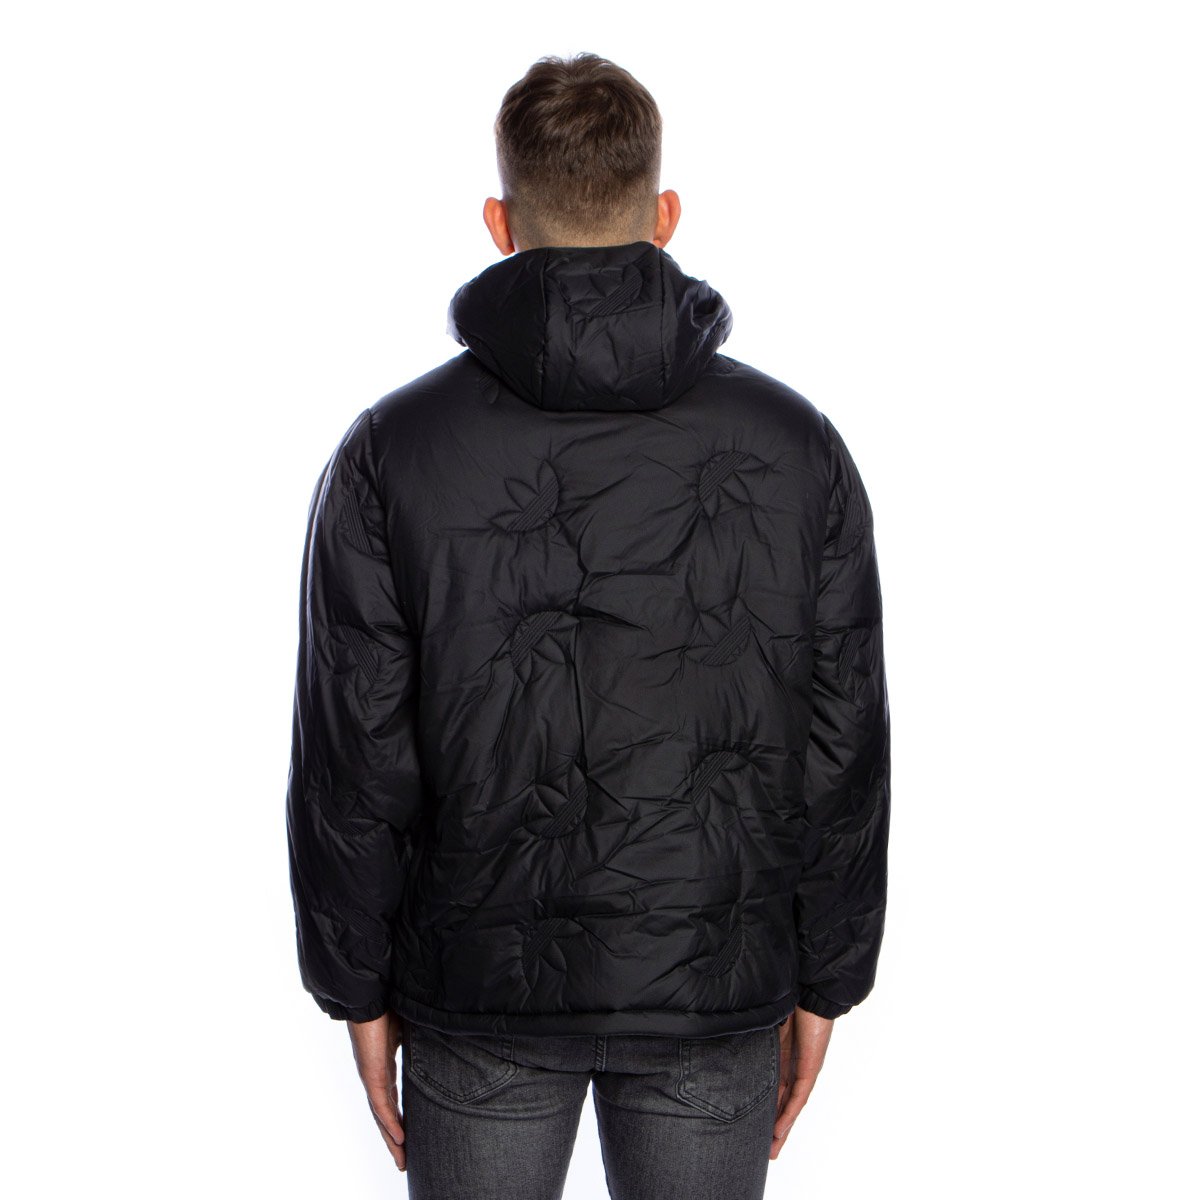 Adidas Originals Trefoil Repat Puffer Jacket black | Bludshop.com